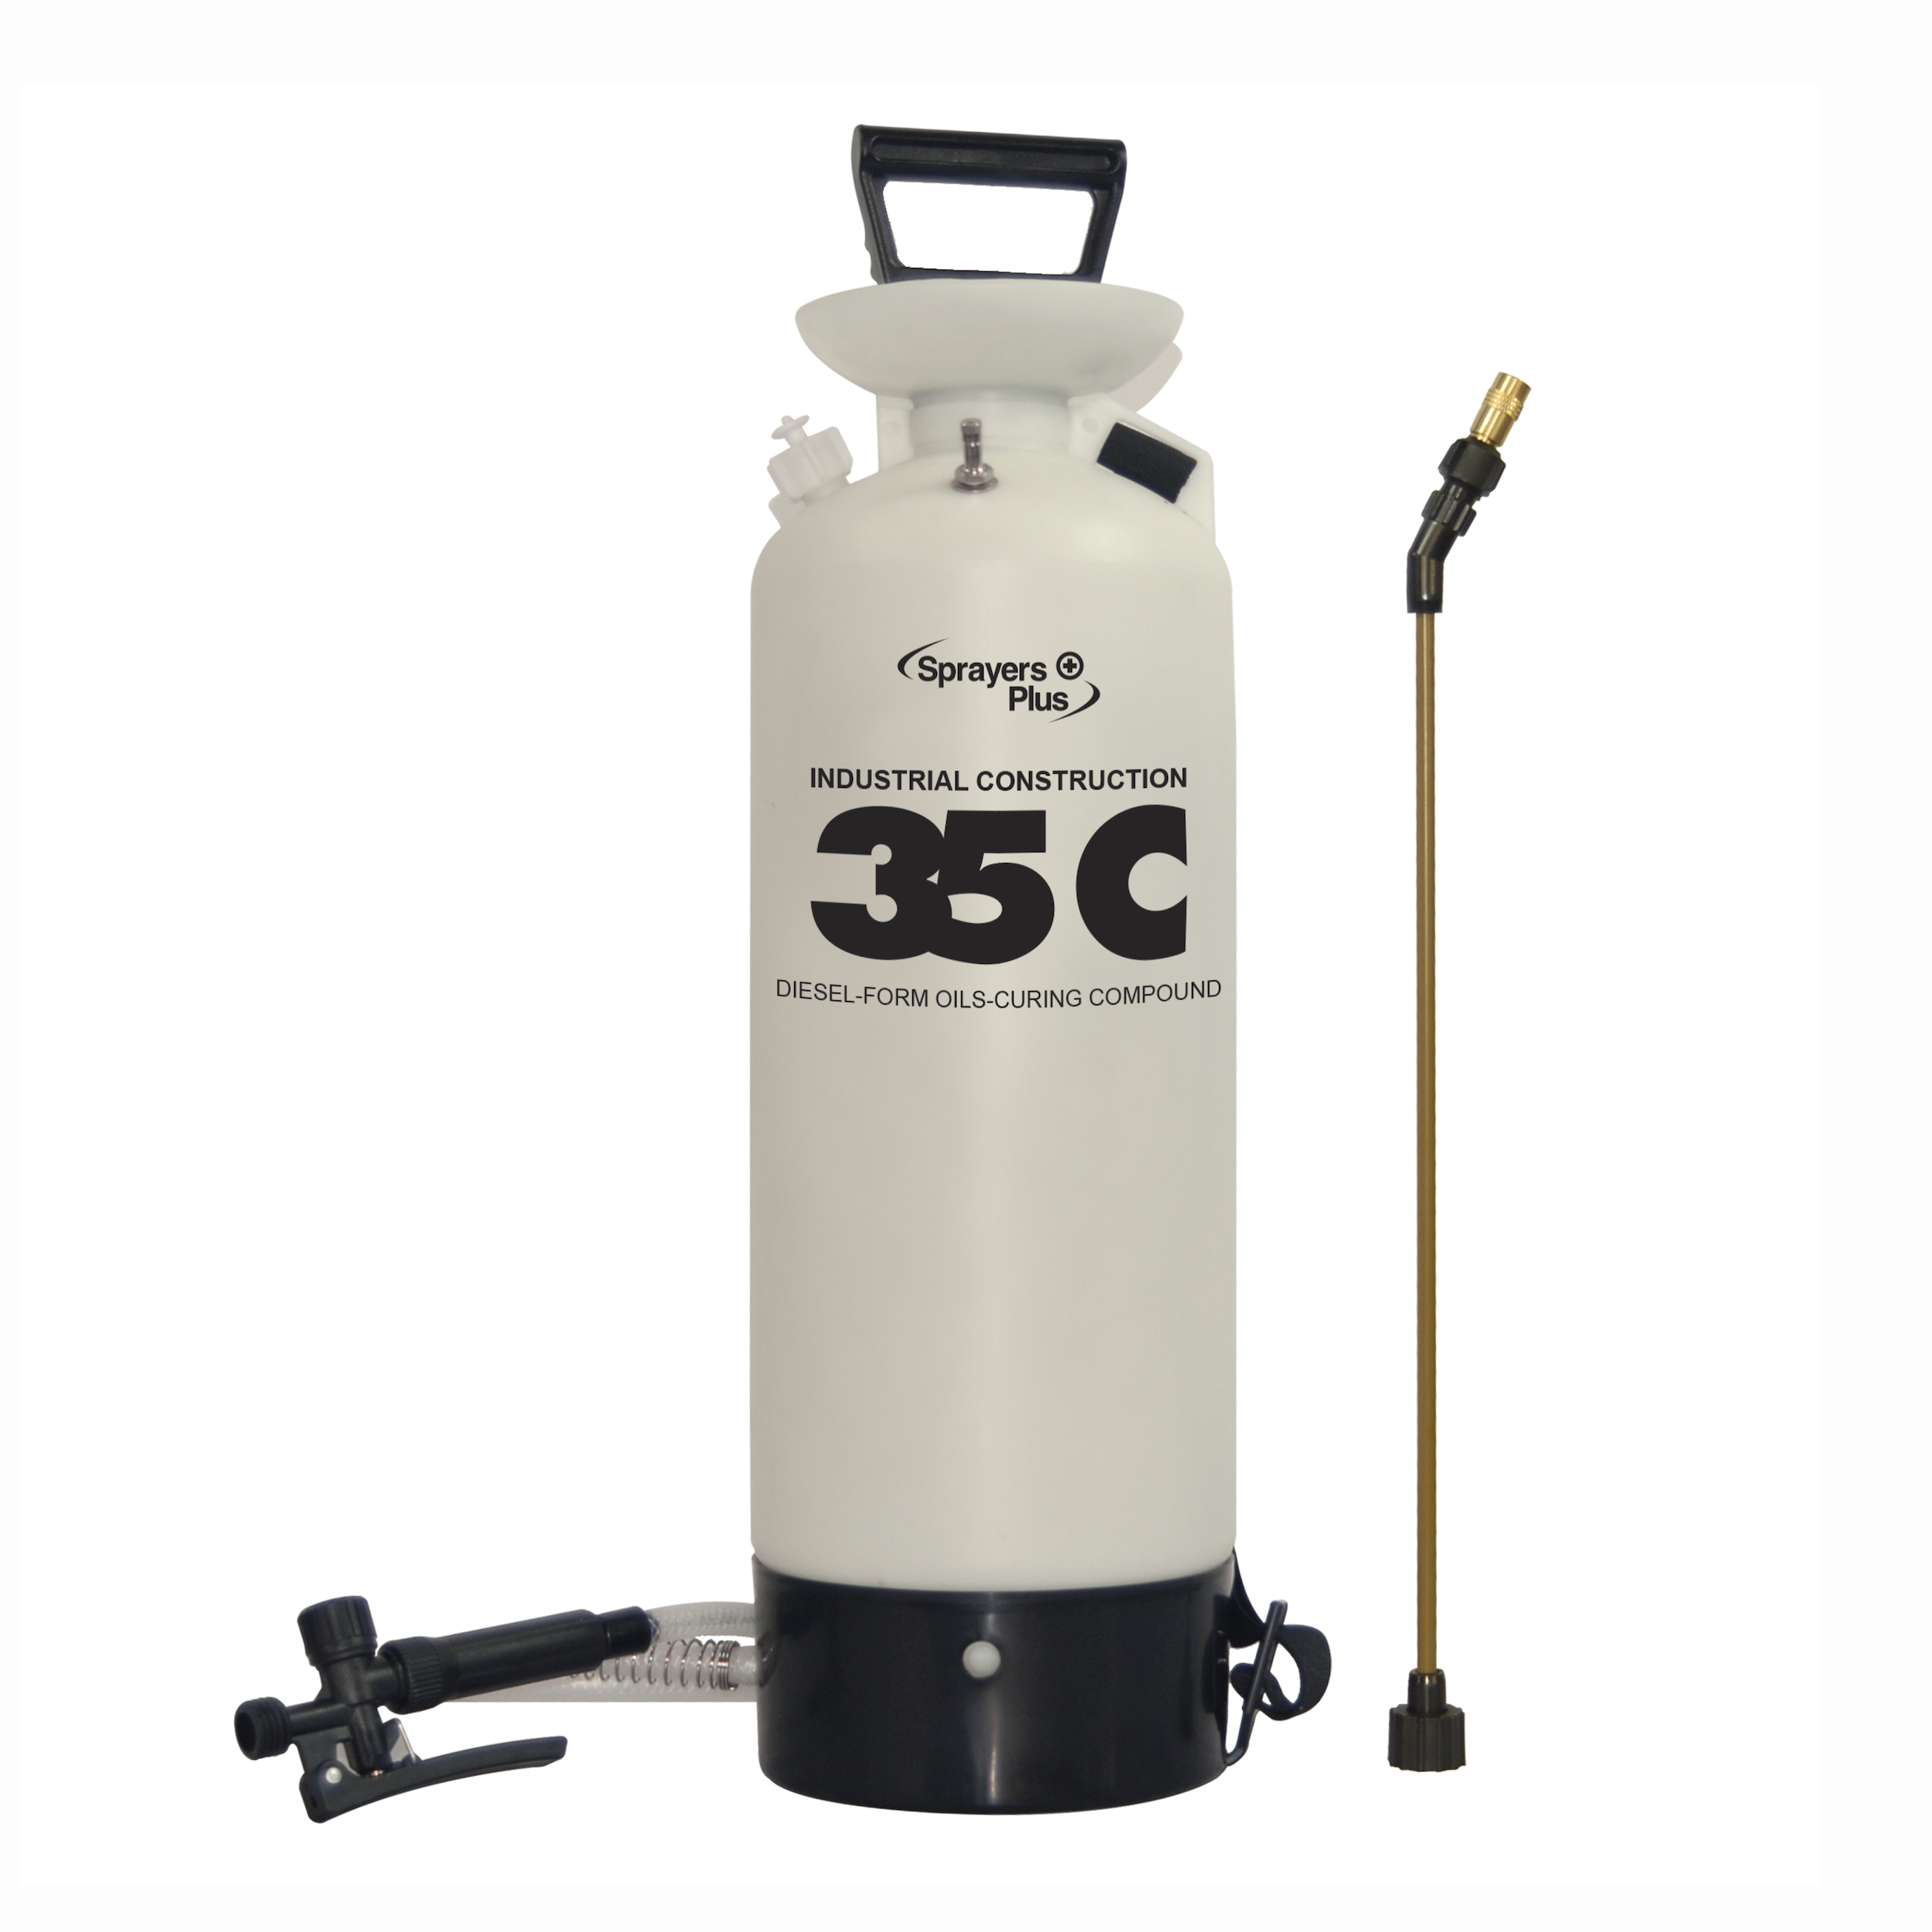 Sprayers Plus CS35C 3 Gallon Commercial Handheld Compression Sprayer